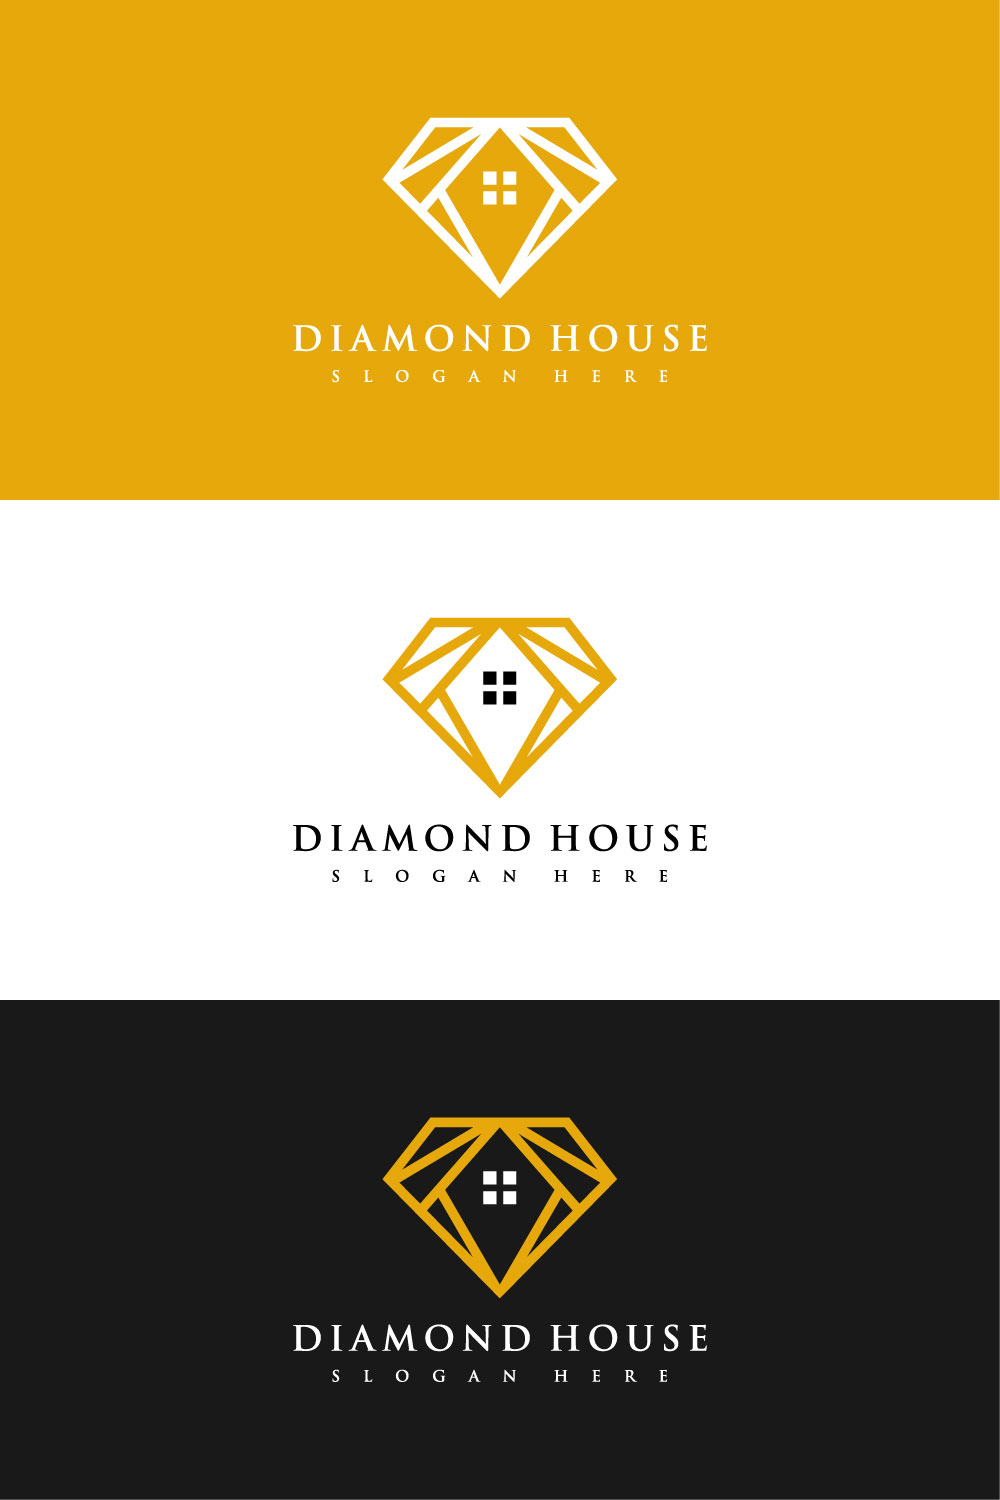 Diamond and House Logo Vector Design pinterest.